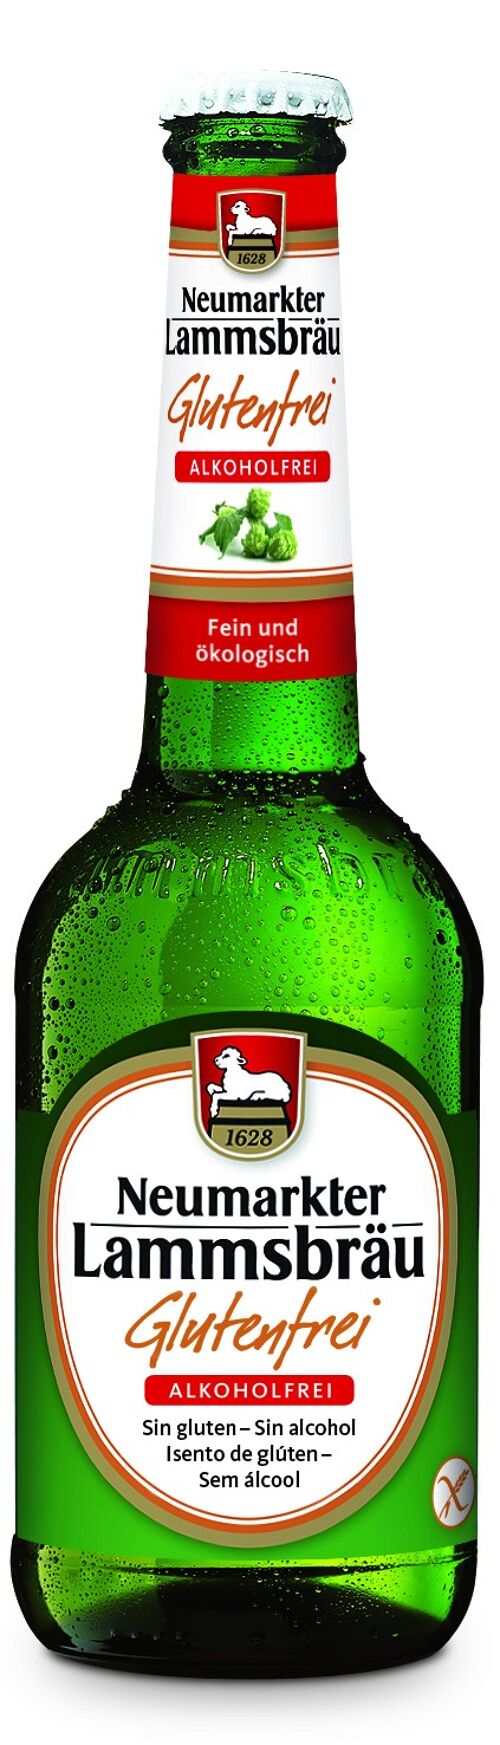 Cerveza sin gluten y sin alcohol BIO  Lammsbräu